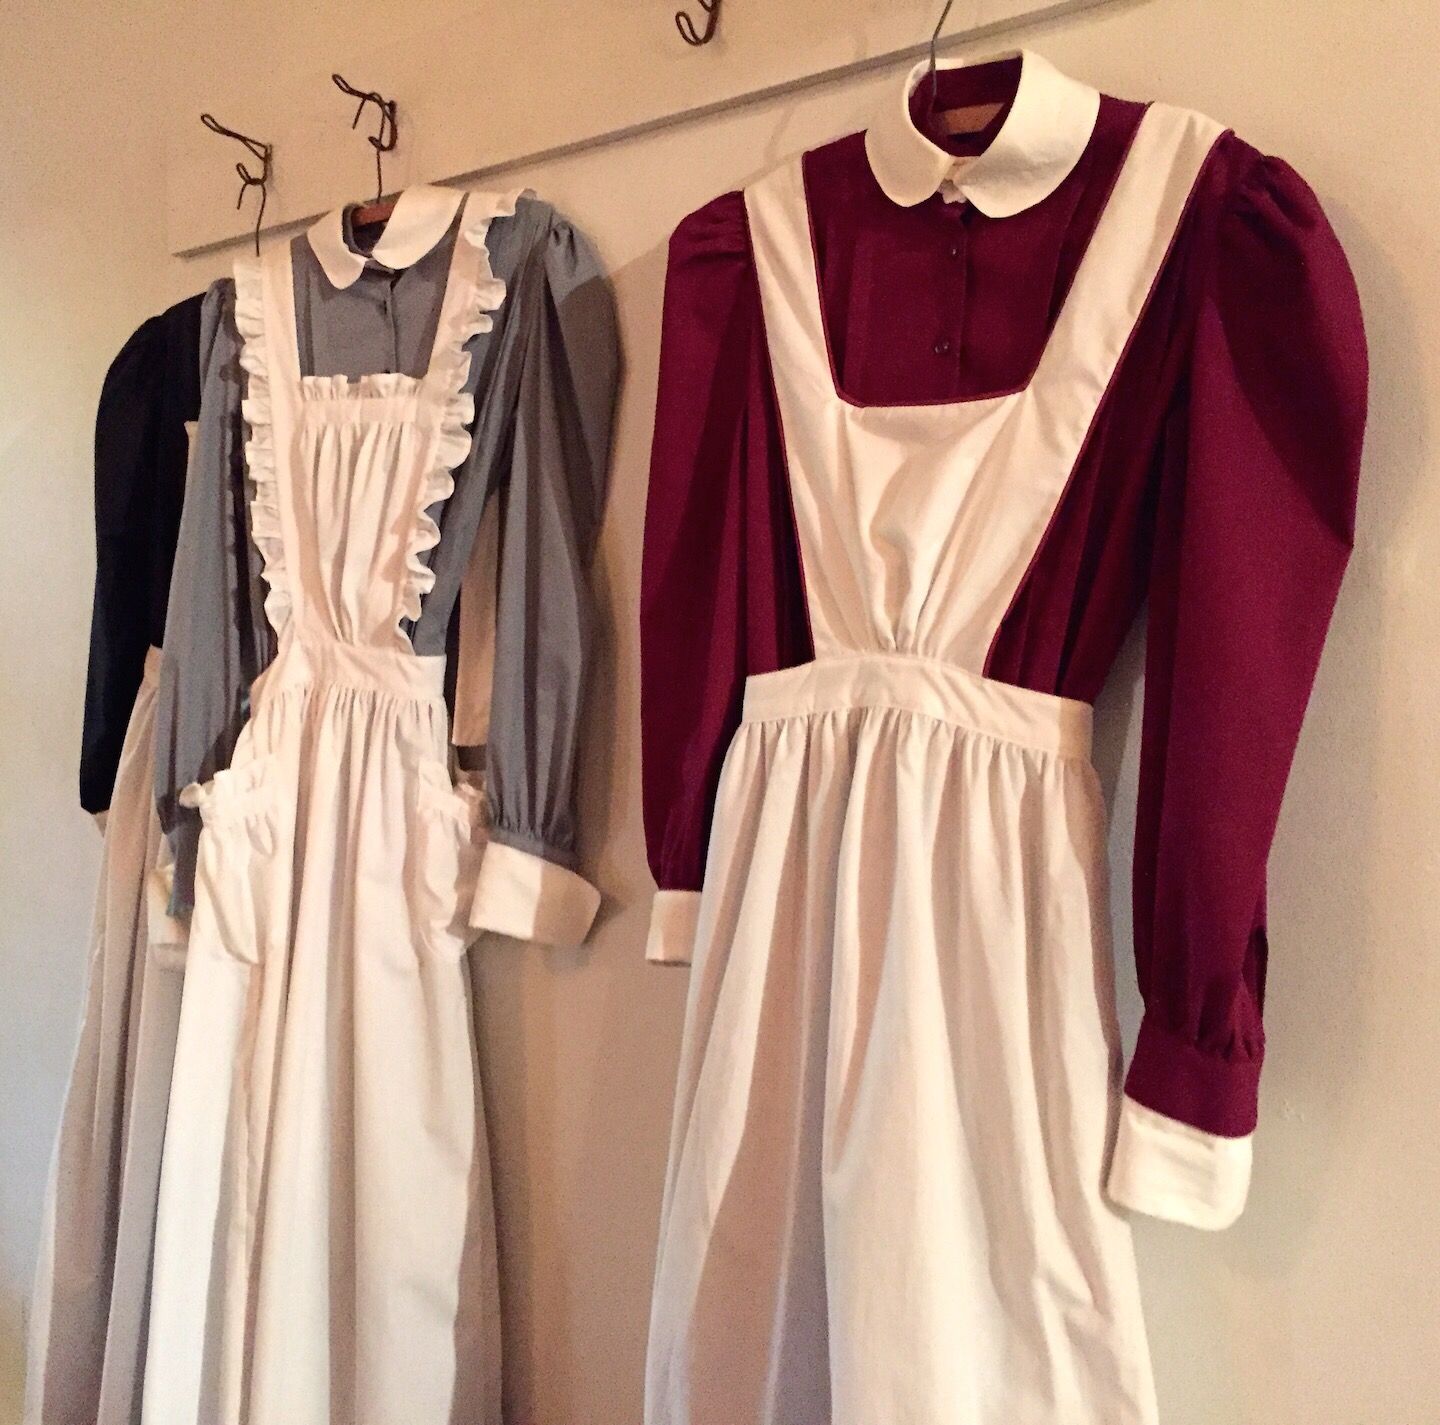 Maid costumes at Maymont.